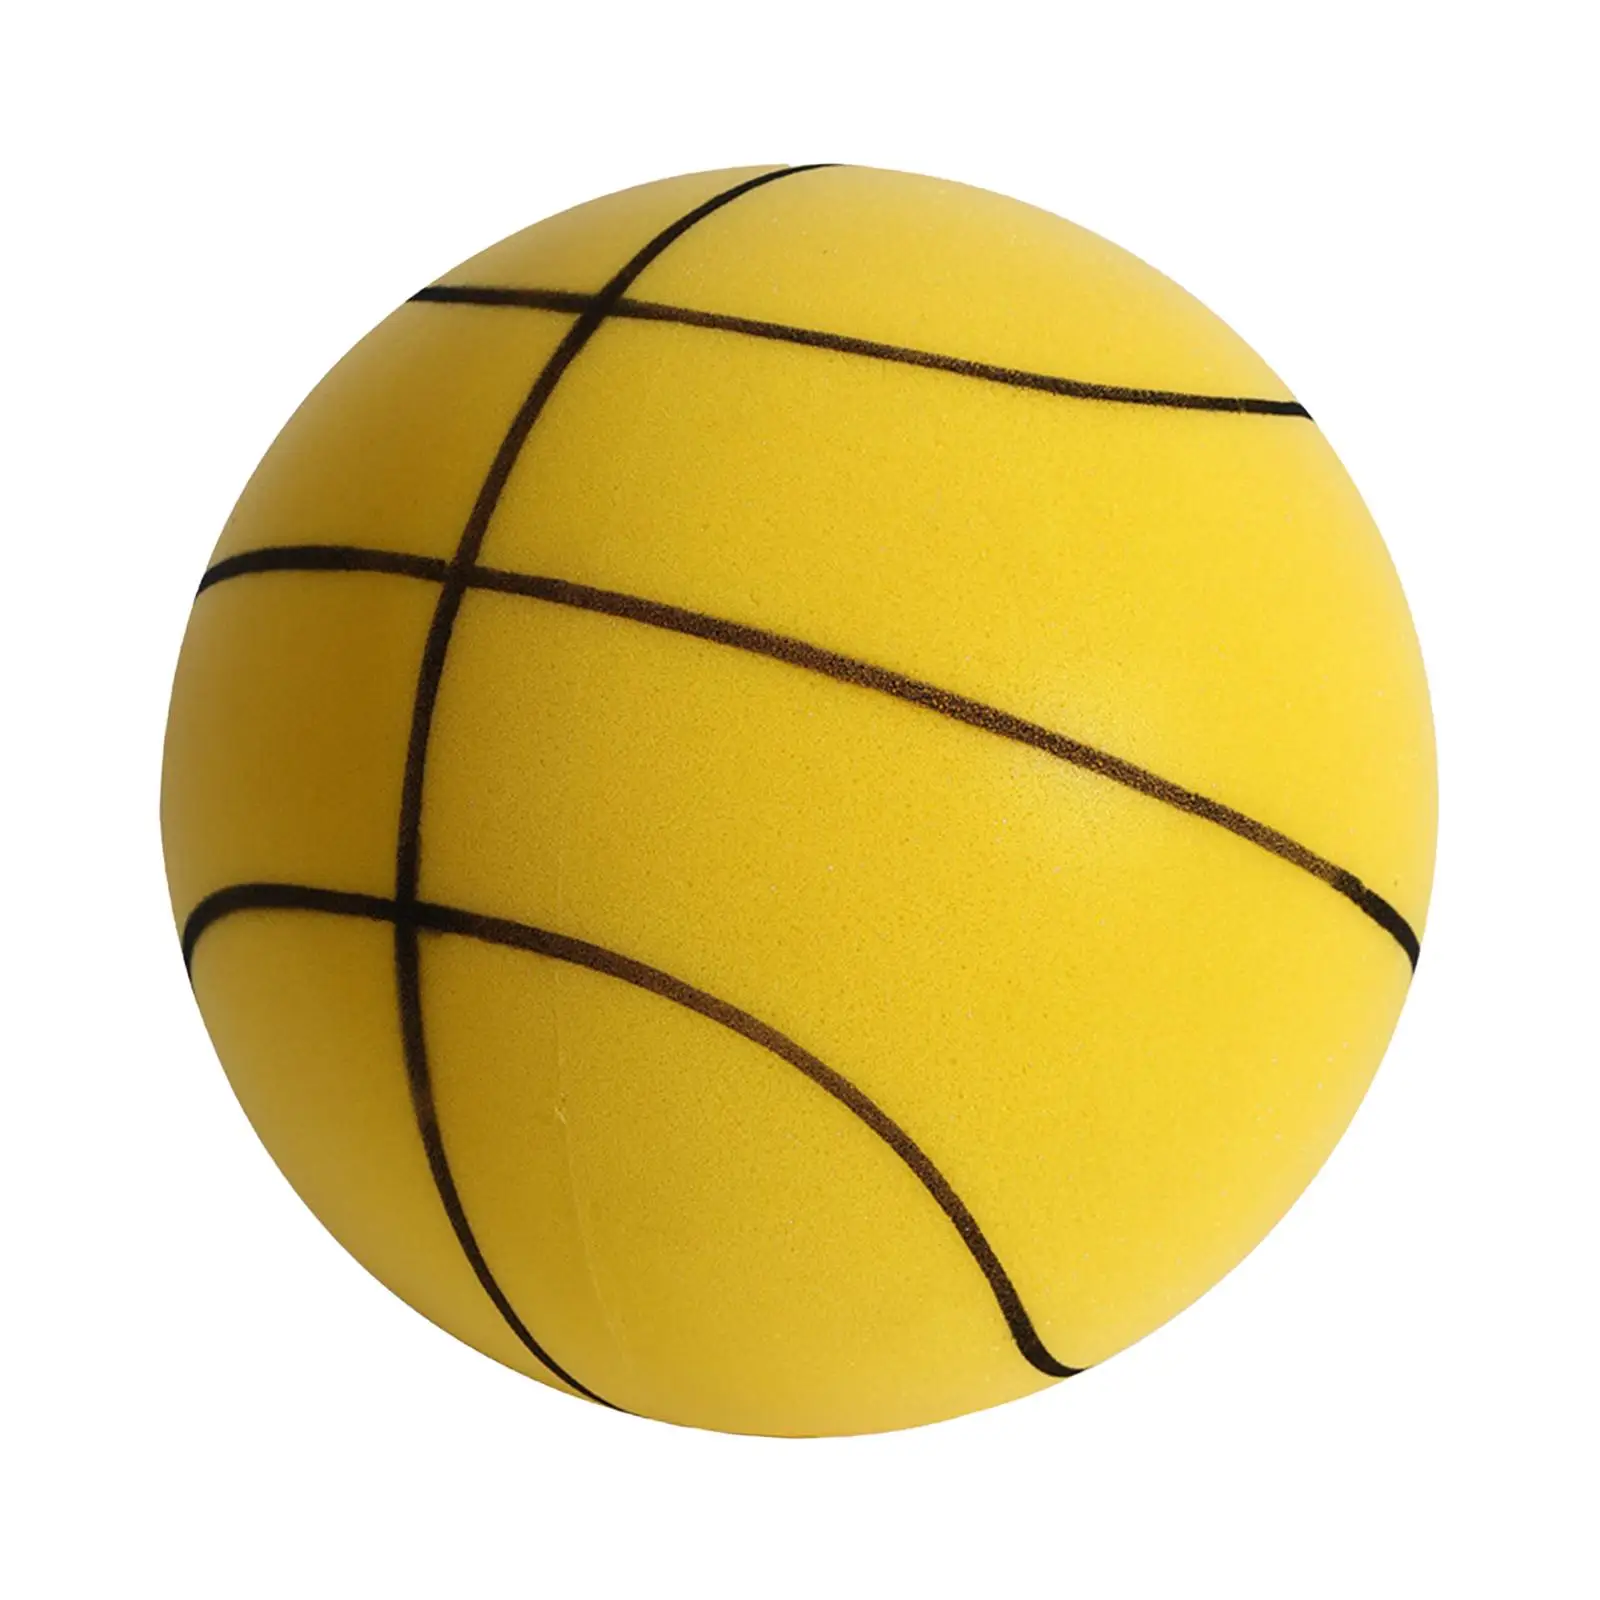 Bouncy Balls Sensory Ball Outdoor Indoor Activities Silent Ball Toy for